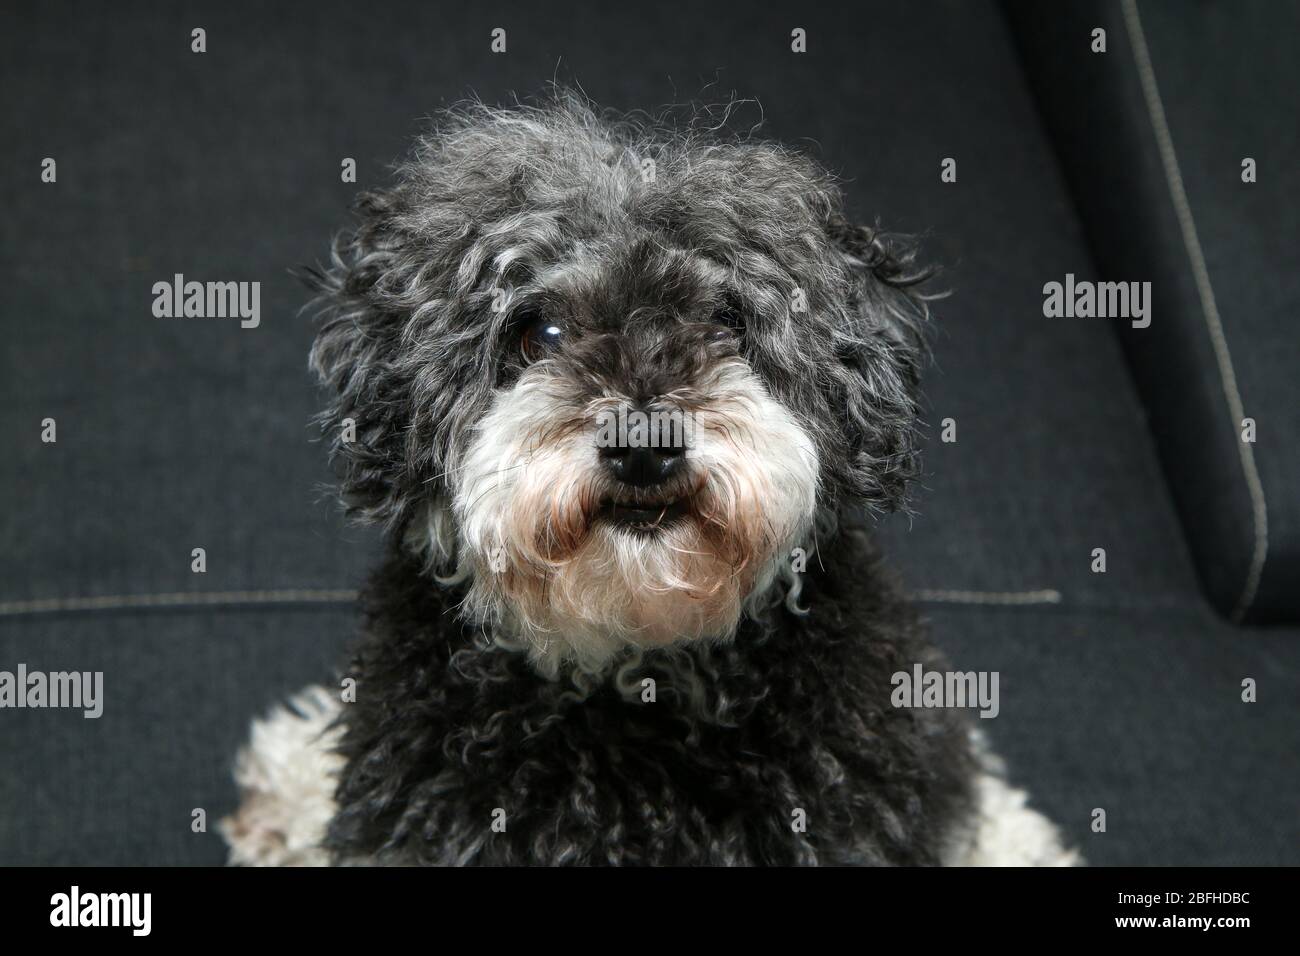 Perro de pelo rizado fotografías e imágenes de alta resolución - Alamy